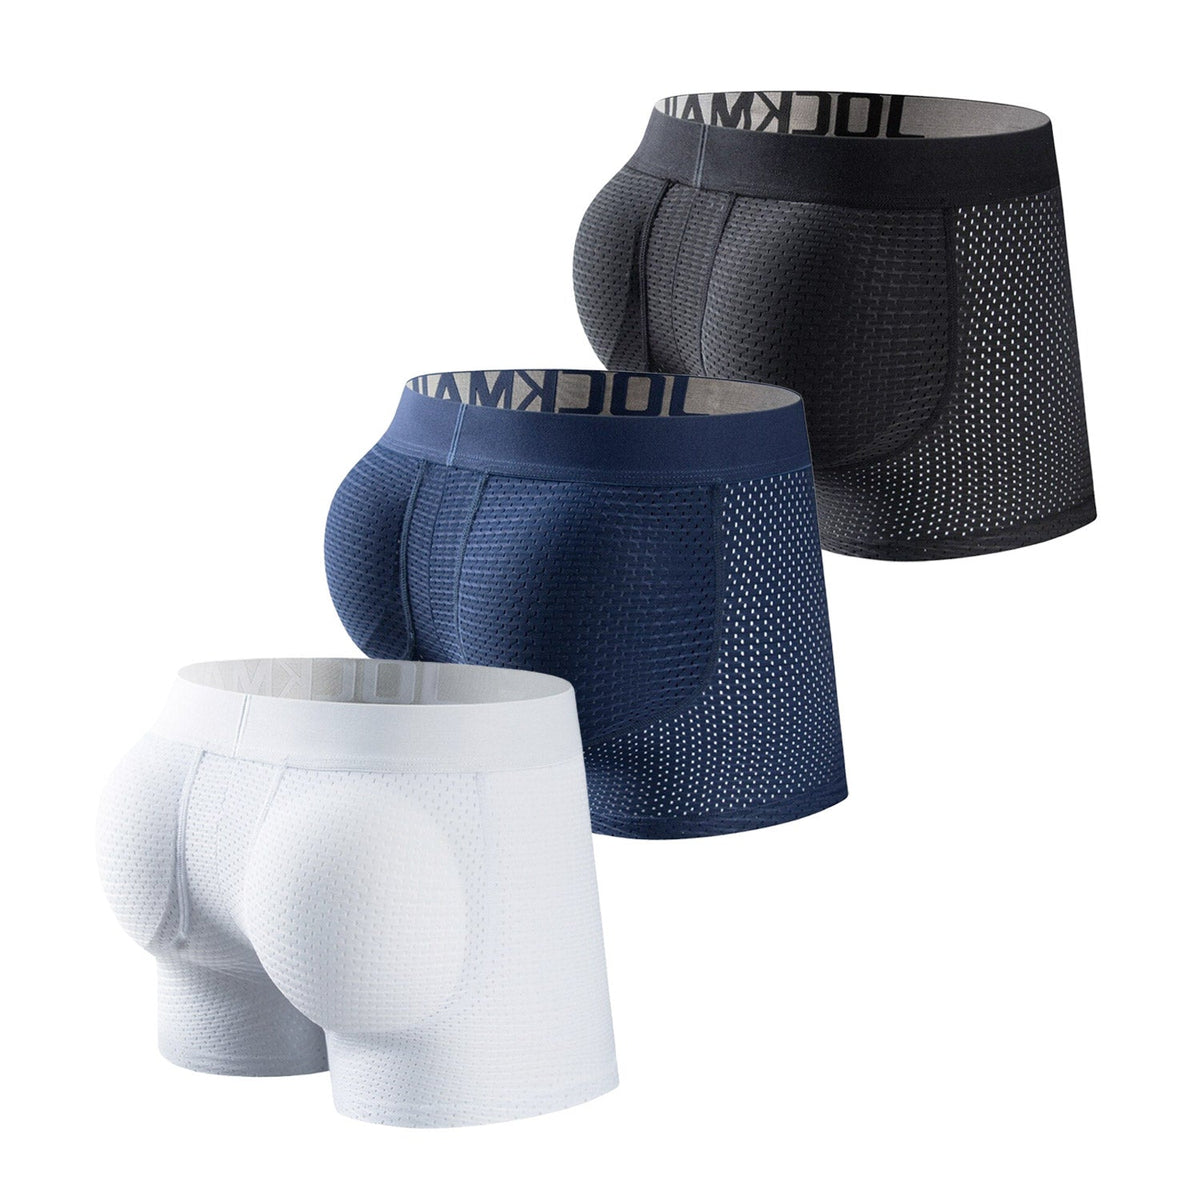 Men’s Sexy Underwear - Jockmail Bun Buster Mesh Boxer Briefs 2-Pack ...